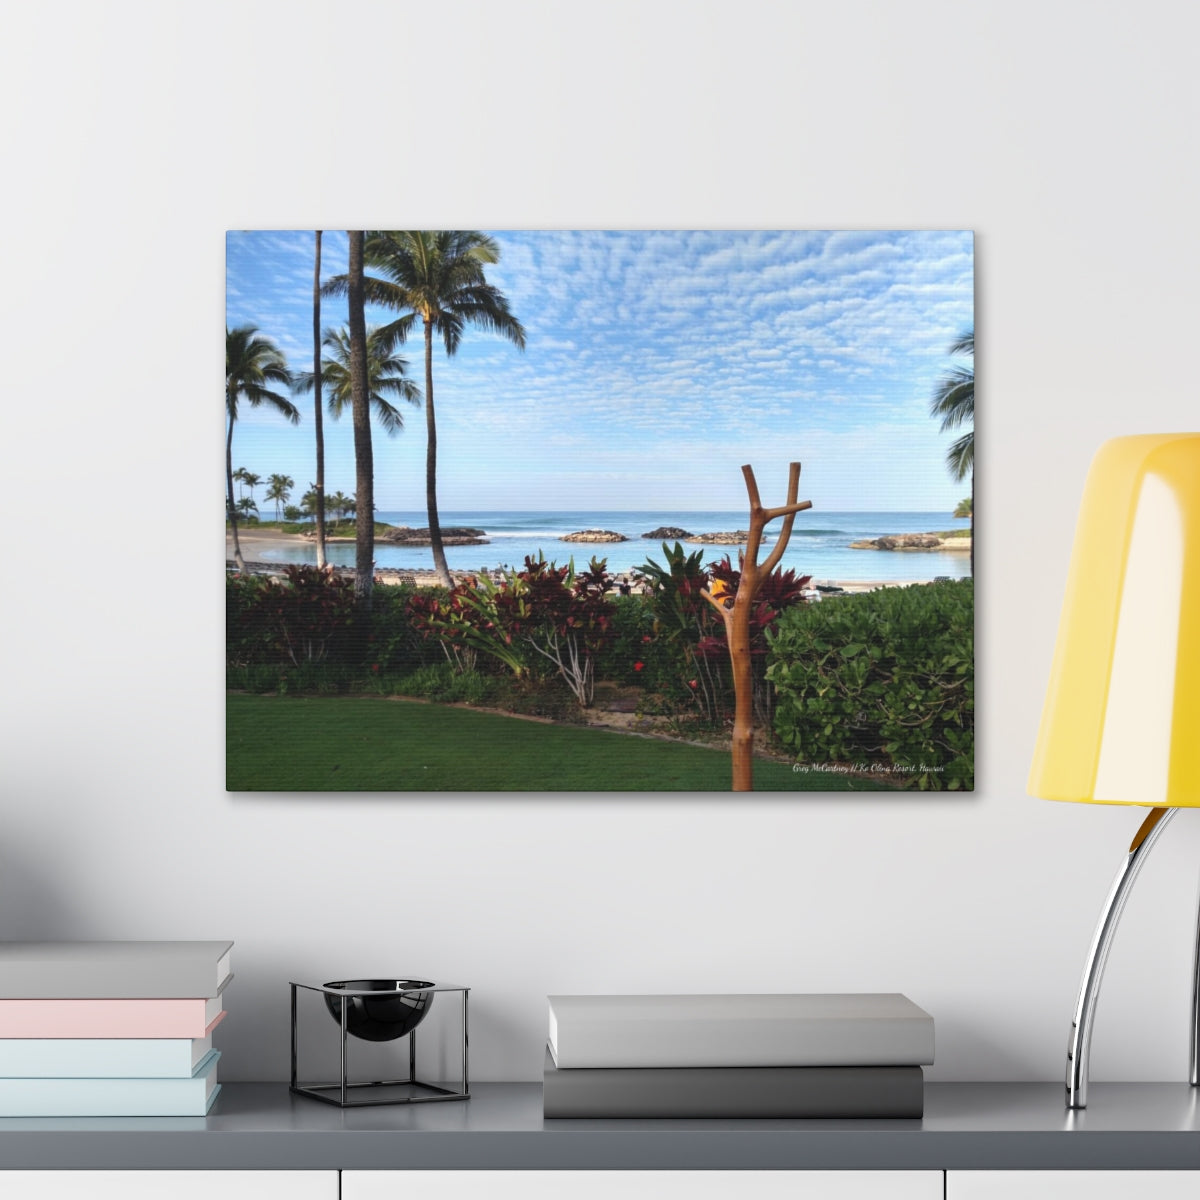 Artwork - Aloha Morning View on Canvas